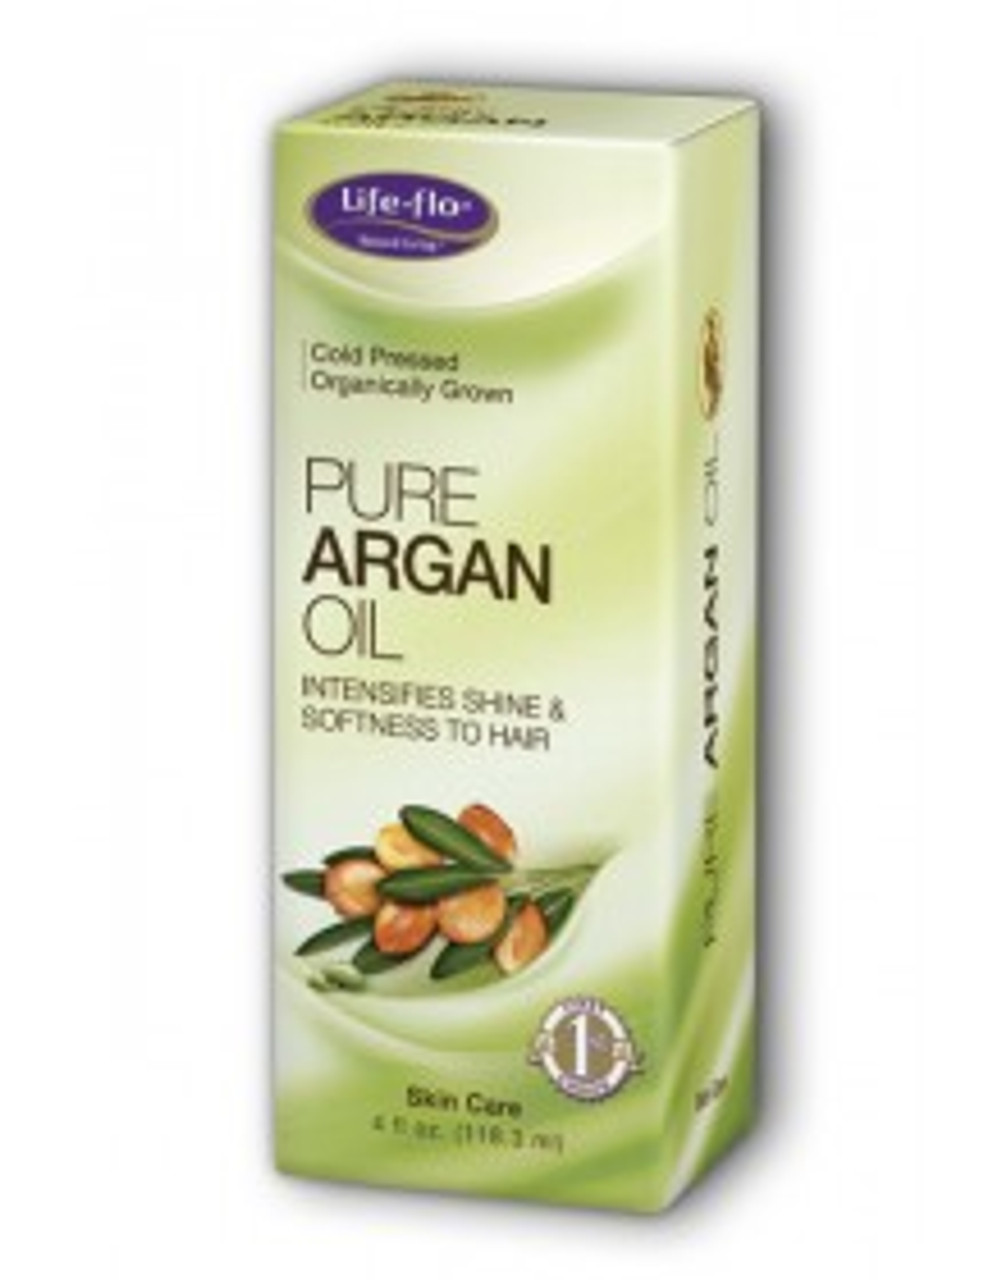 Life-Flo Pure Argan Oil 4oz